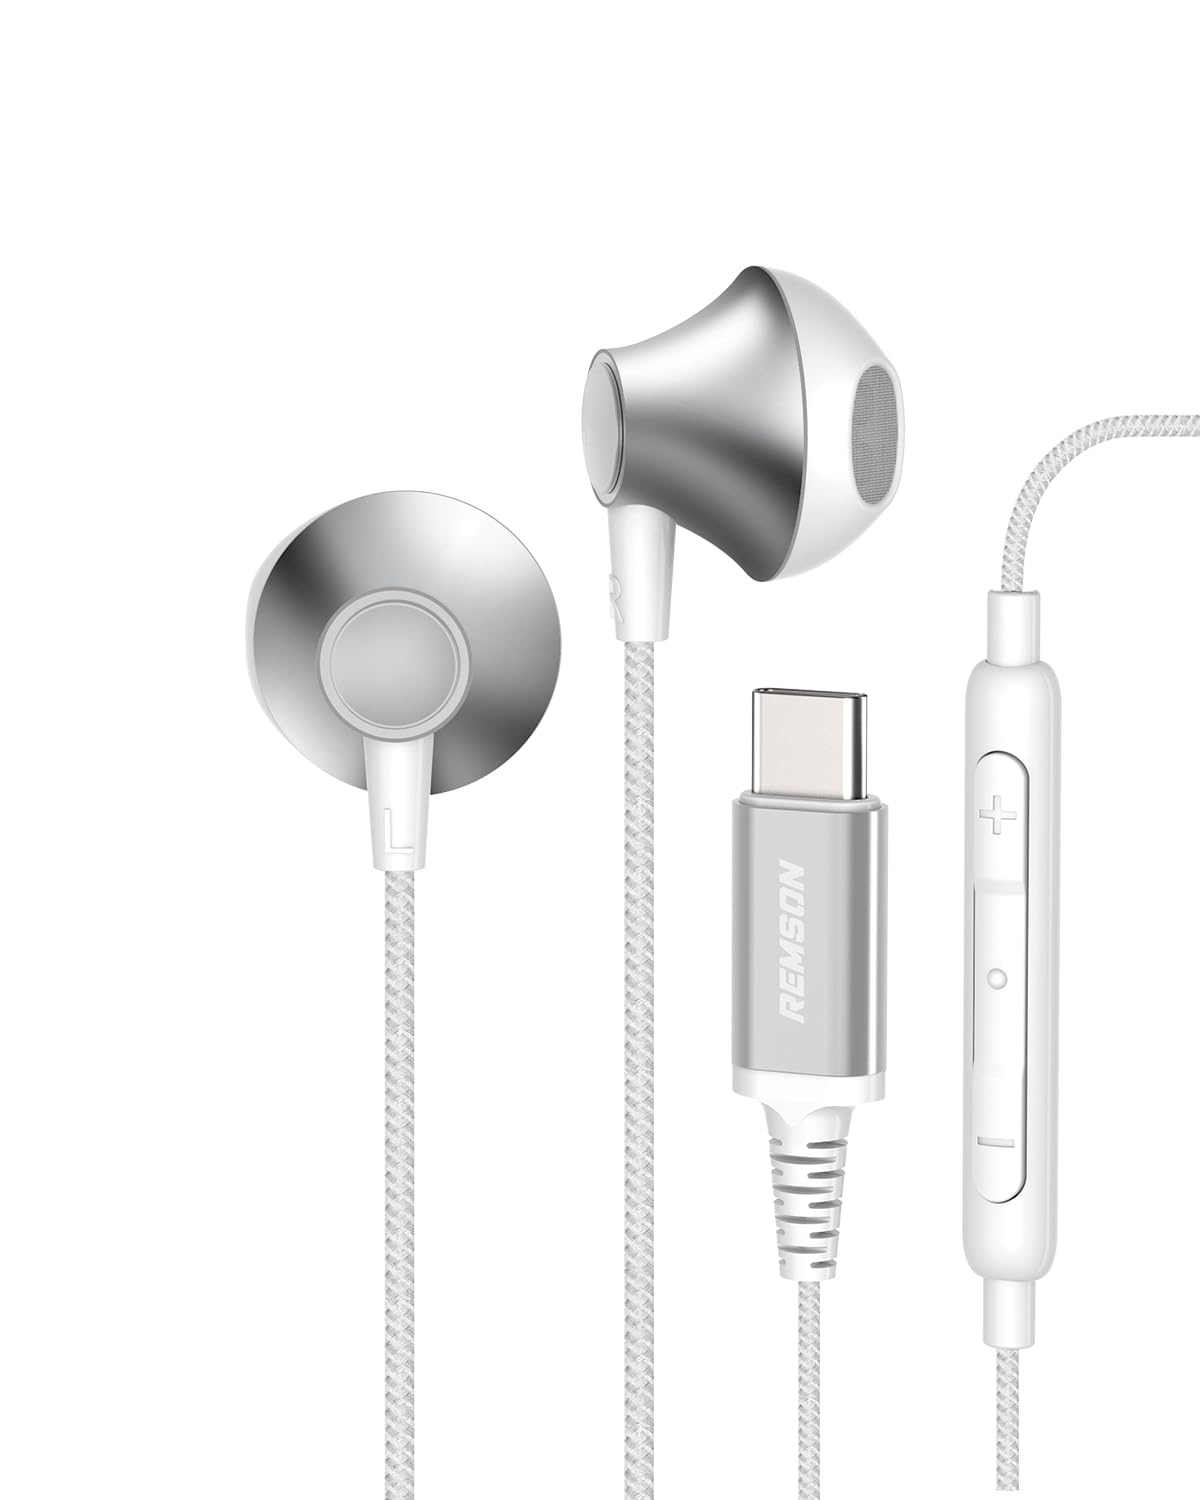 Remson Wired Stereo Earphones USB Type-C Connector Headphones Earphones Earbuds Hi-Fi In-Line Remote - White